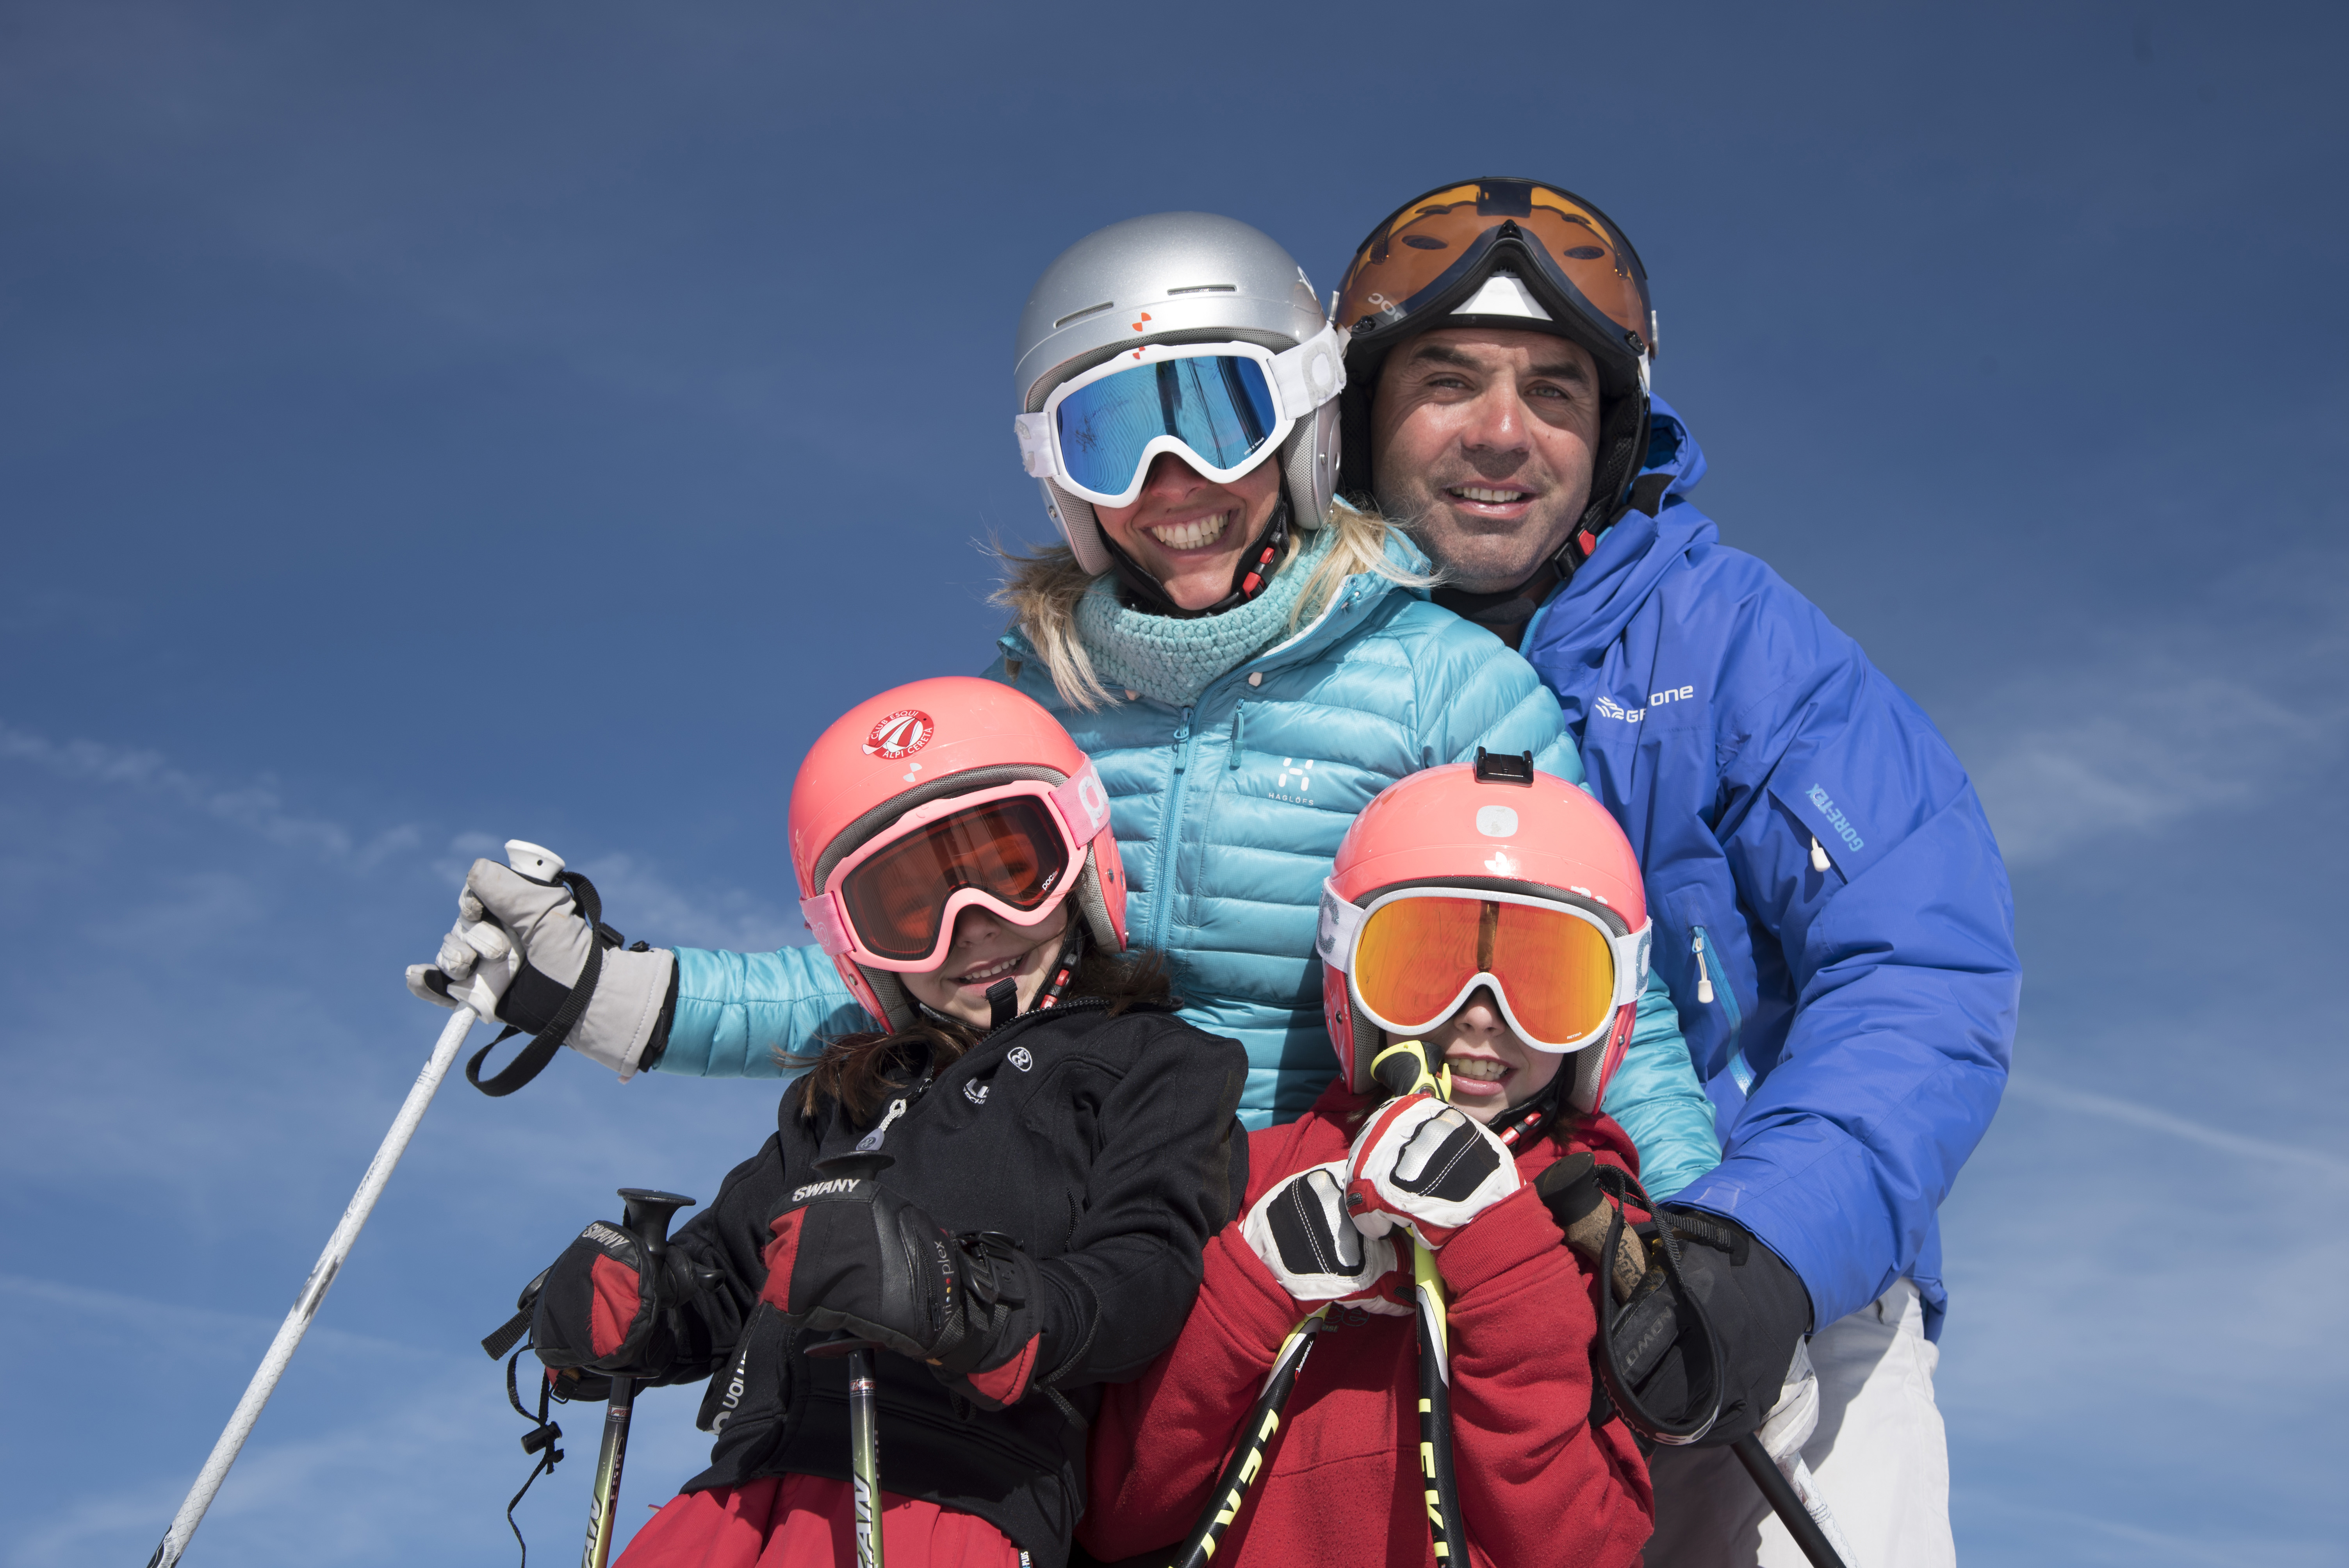 La Molina Family Season Ski pass